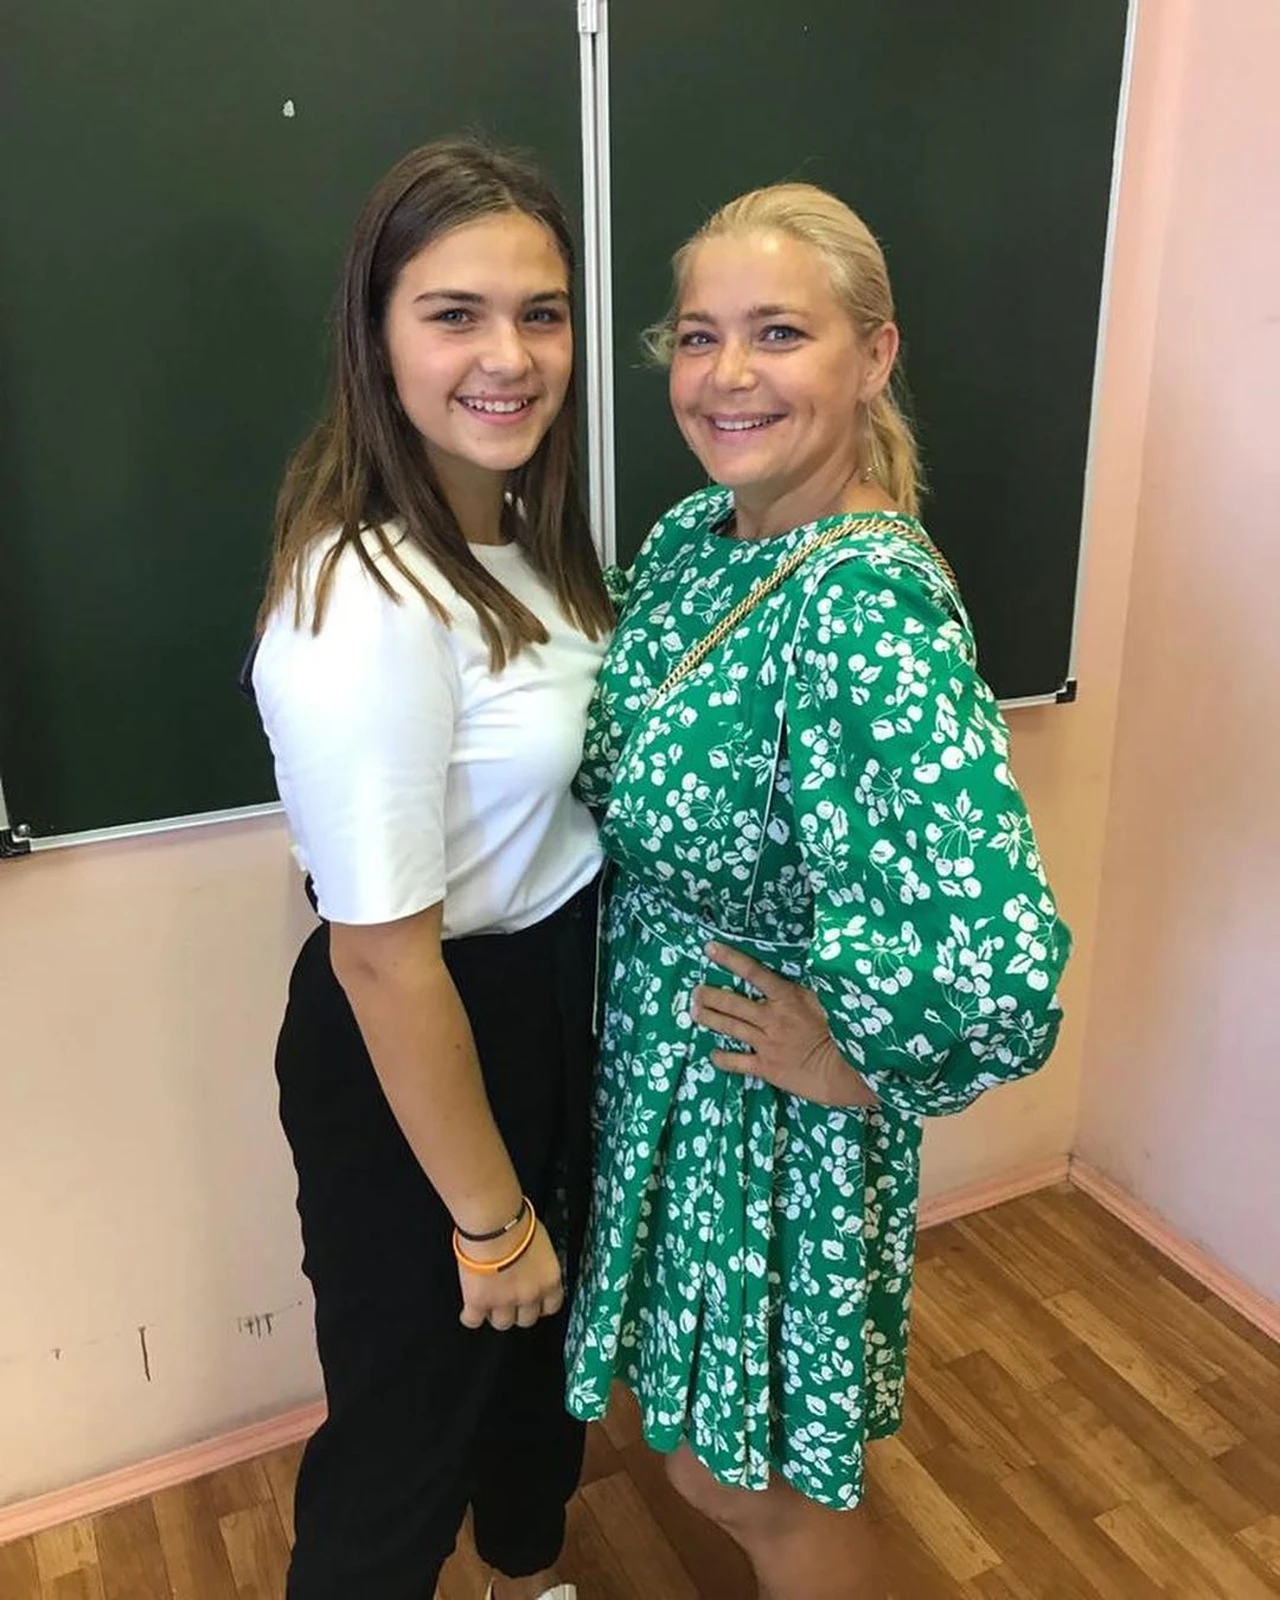 Актрисы Ирина Пегова и Наталья Бочкарева отвели детей в школу - KP.RU